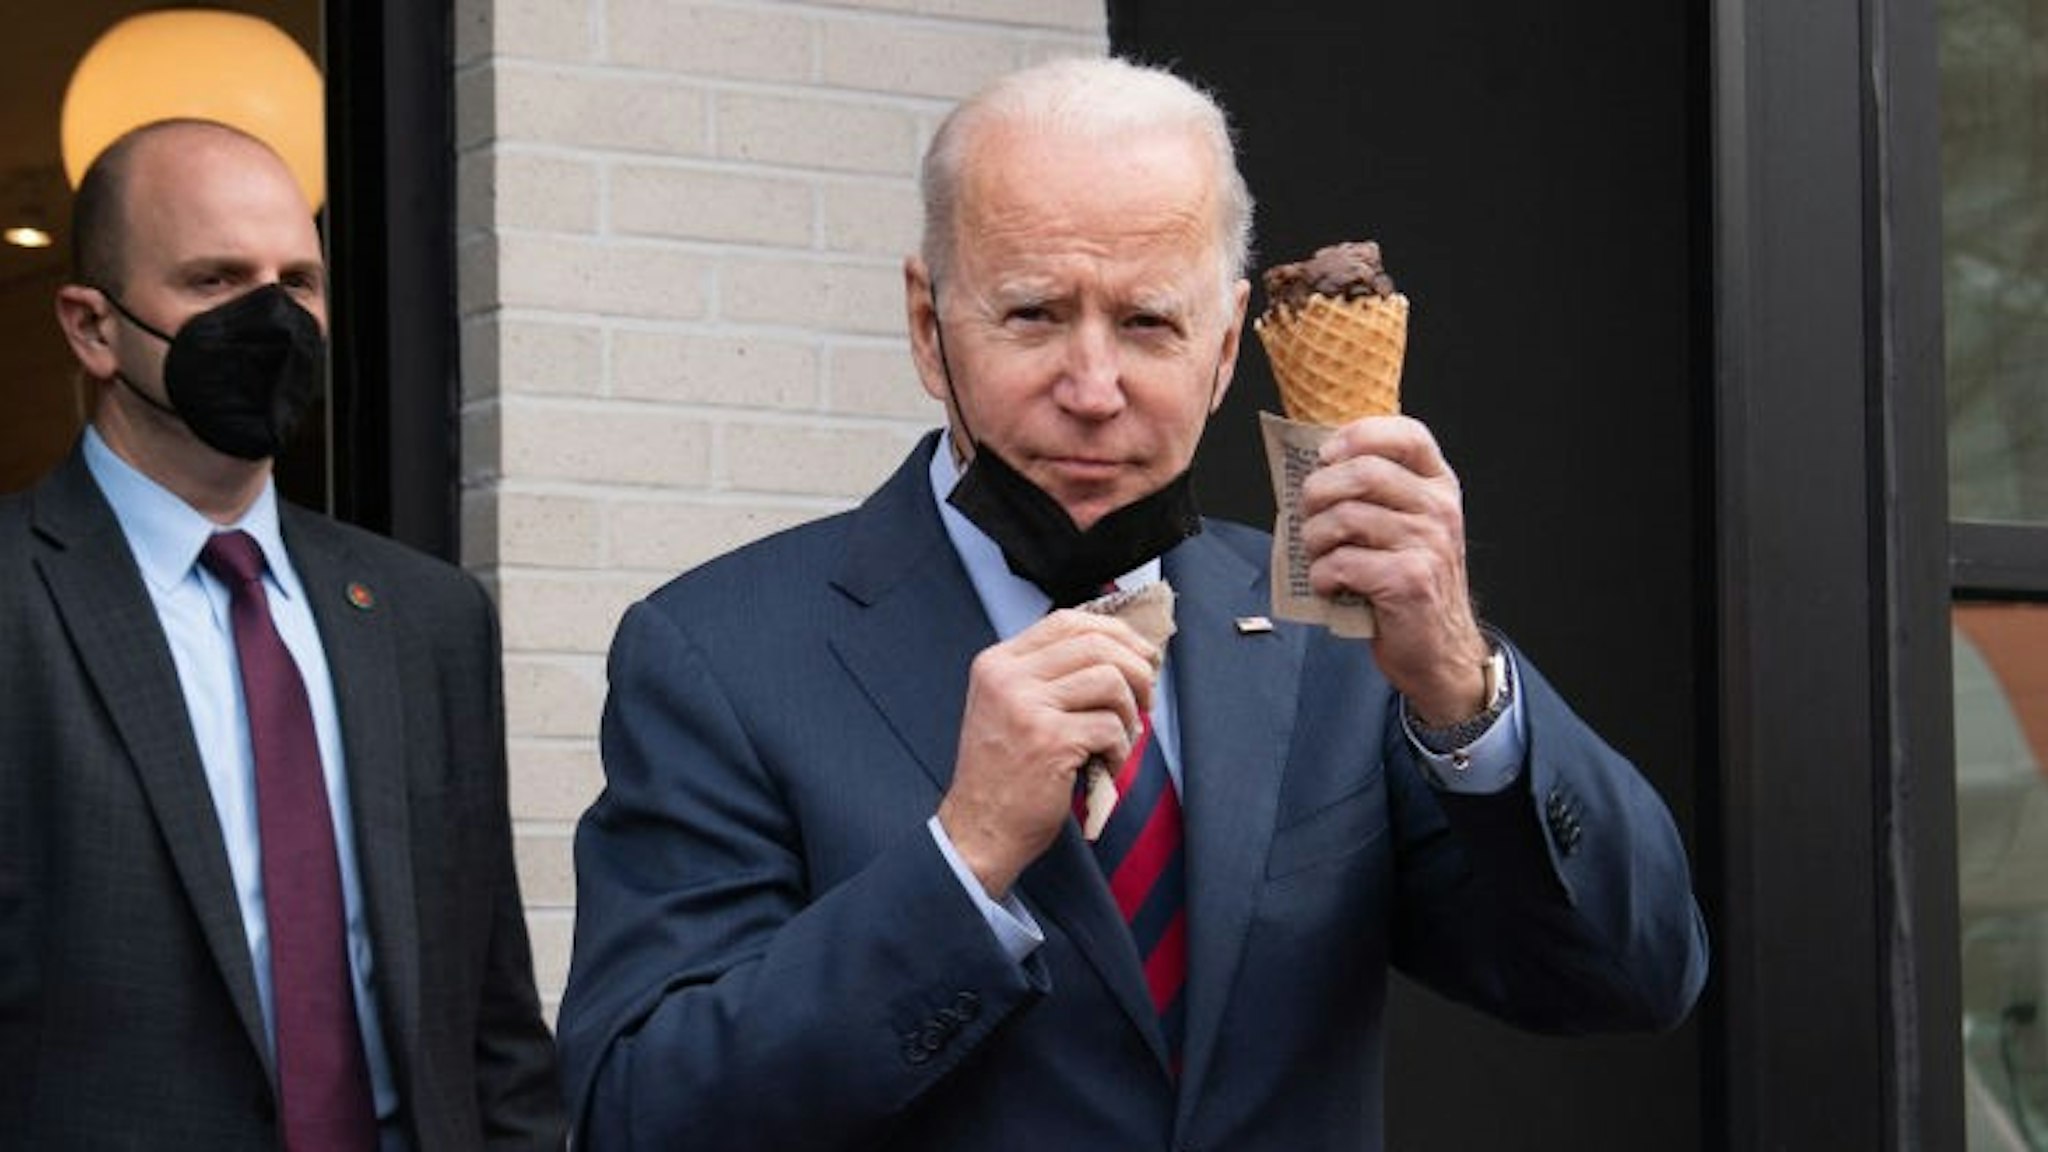 US President Joe Biden carries an ice cream cone as he leaves Jeni's Ice Cream in Washington, DC, on January 25, 2022. (Photo by SAUL LOEB / AFP) (Photo by